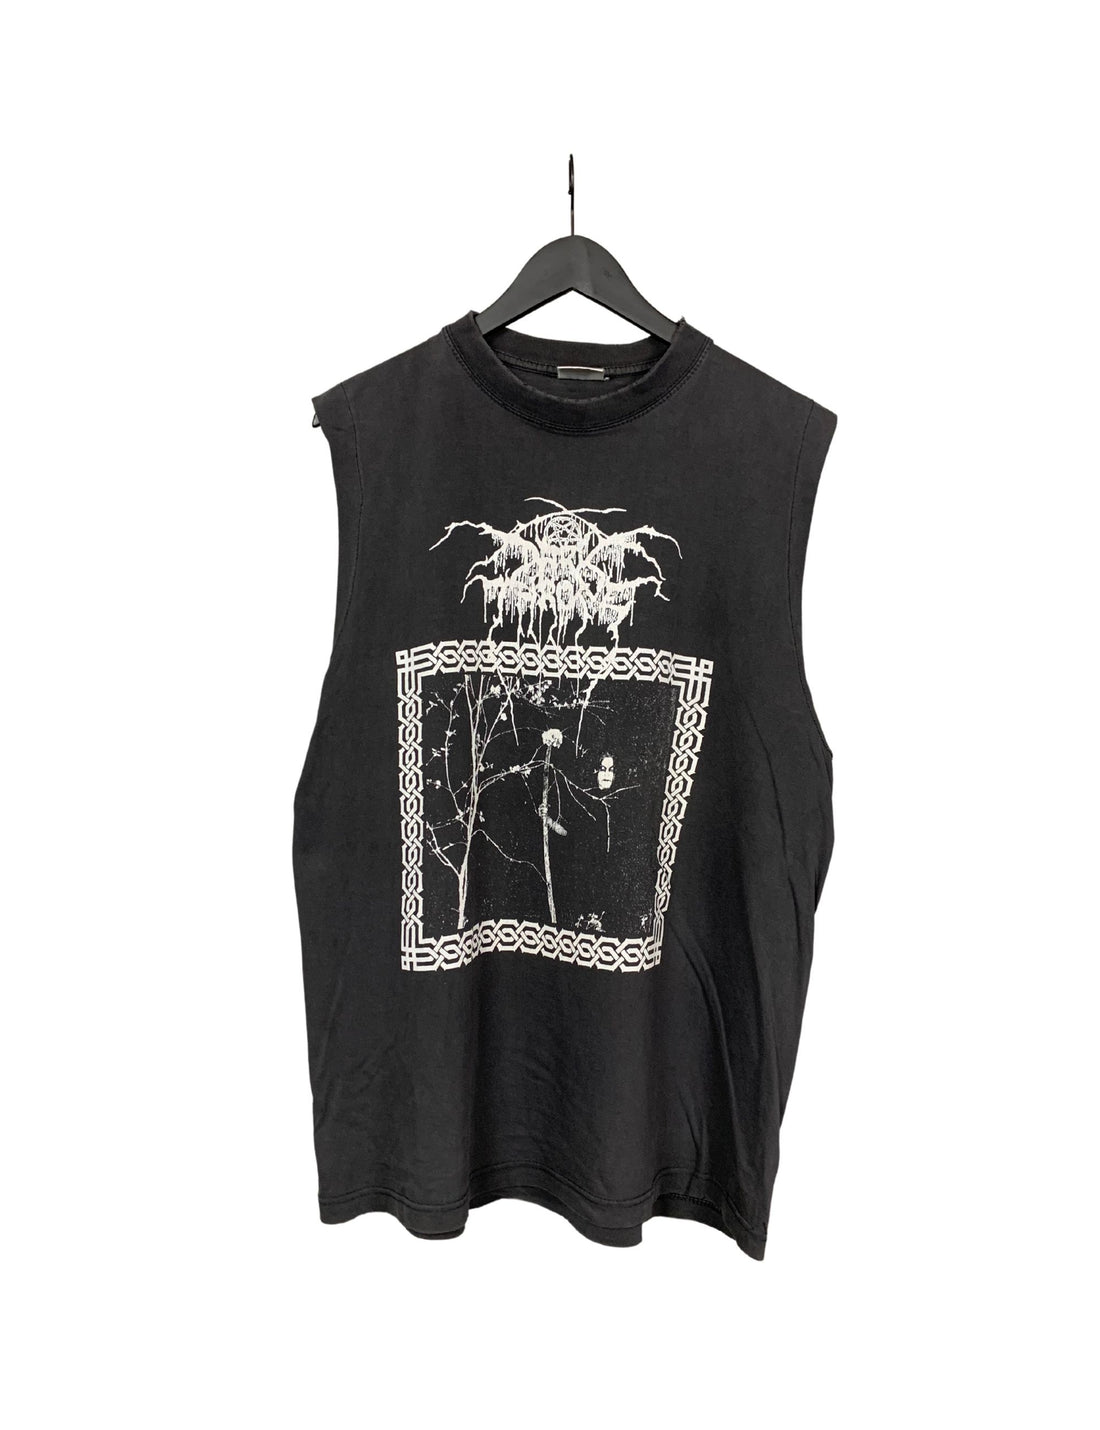 Darkthrone 90s Funeral Moon Vintage Shirt